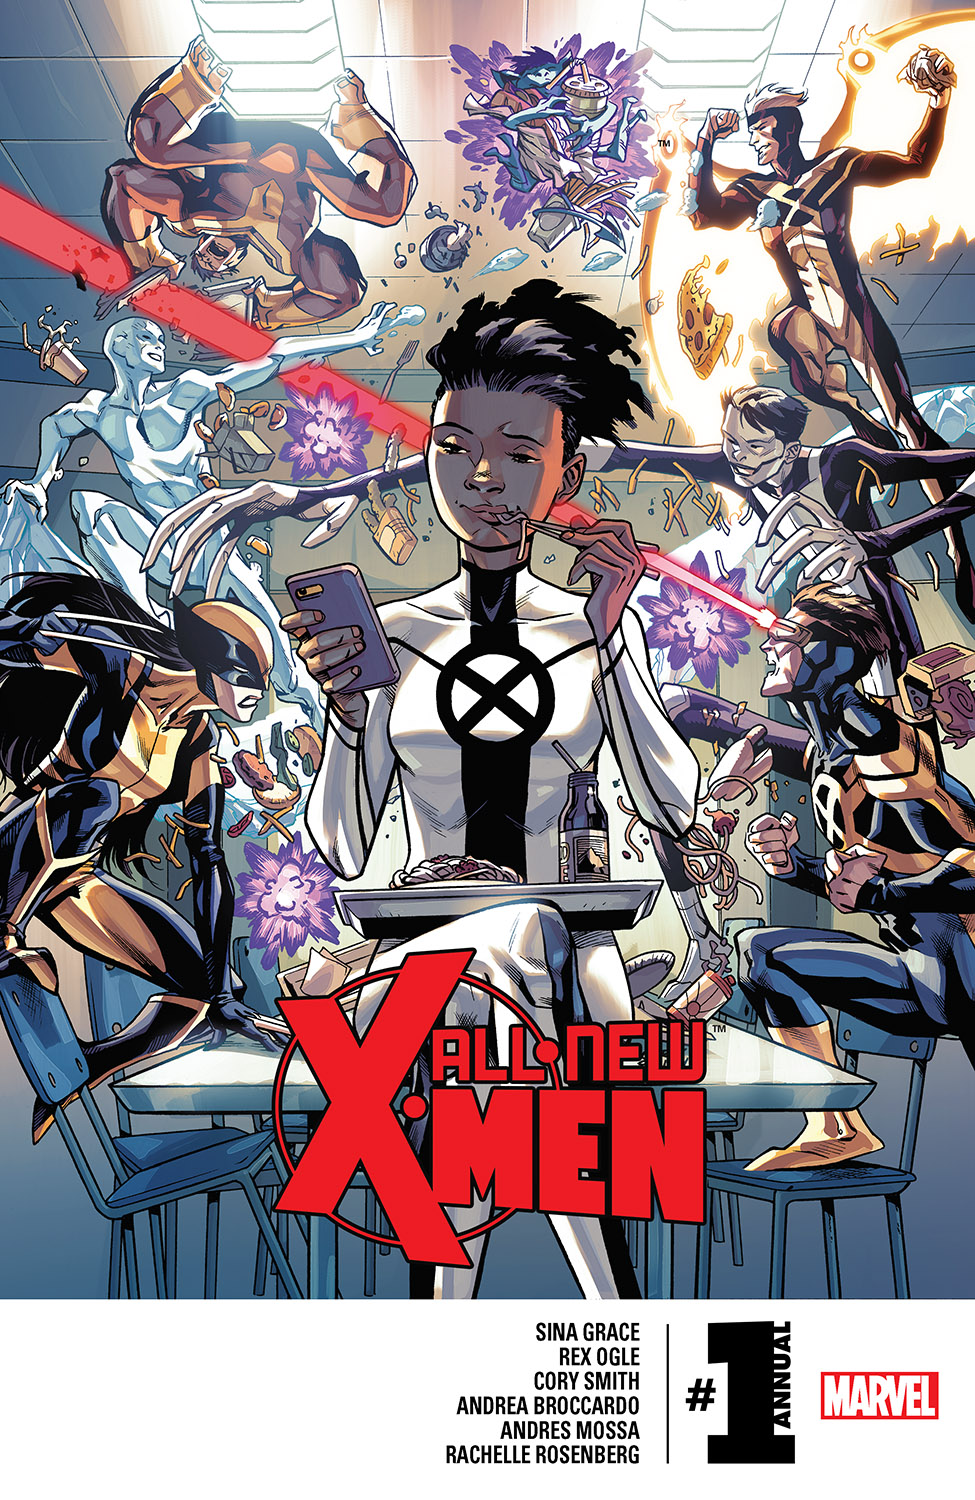 All-New X-Men Annual (2016) #1